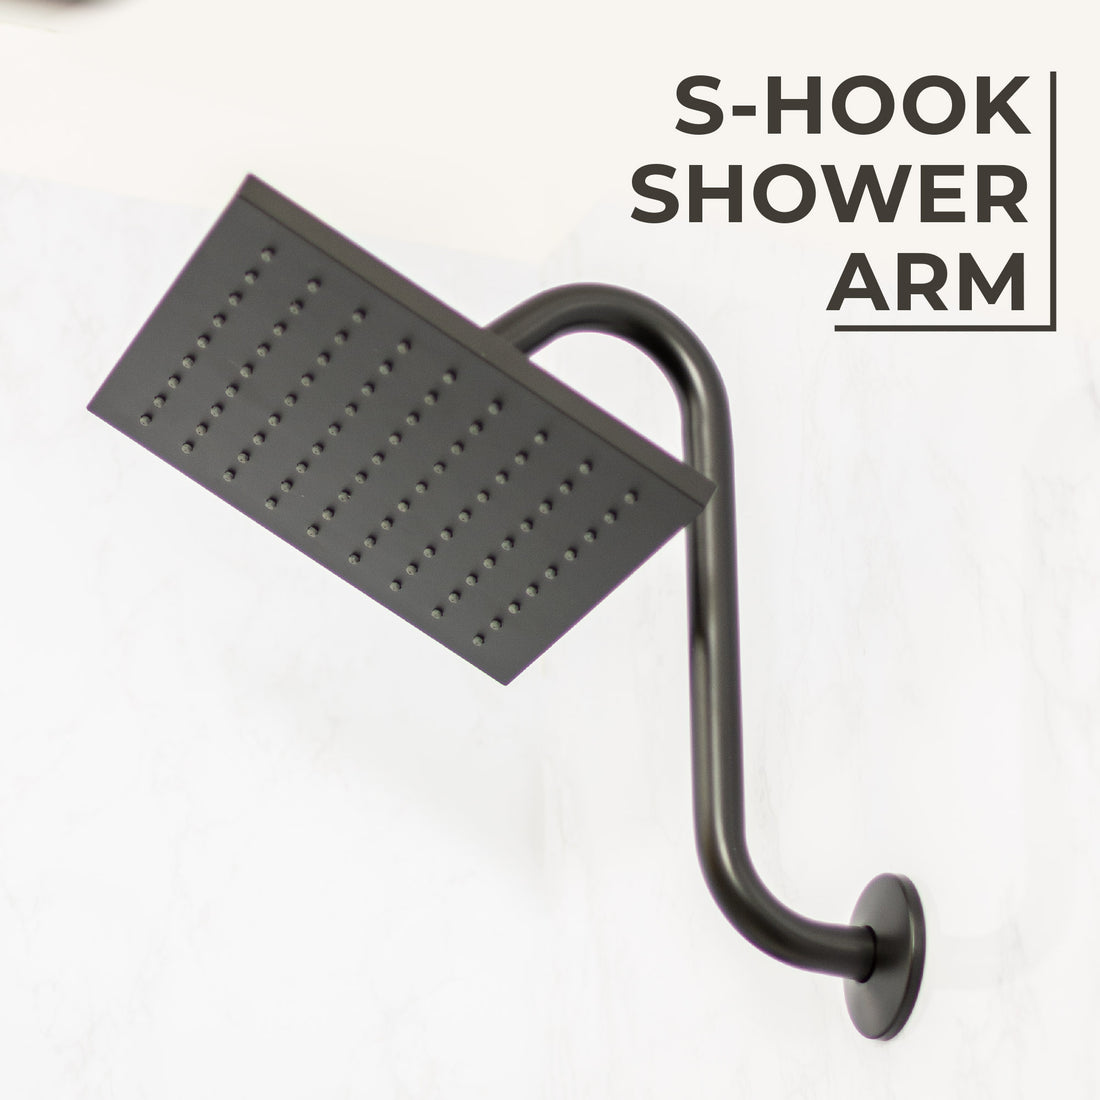 12 in. S-Shaped Stainless Steel Shower Head Extension Arm (Black Finish) - Utility sinks vanites Tehila